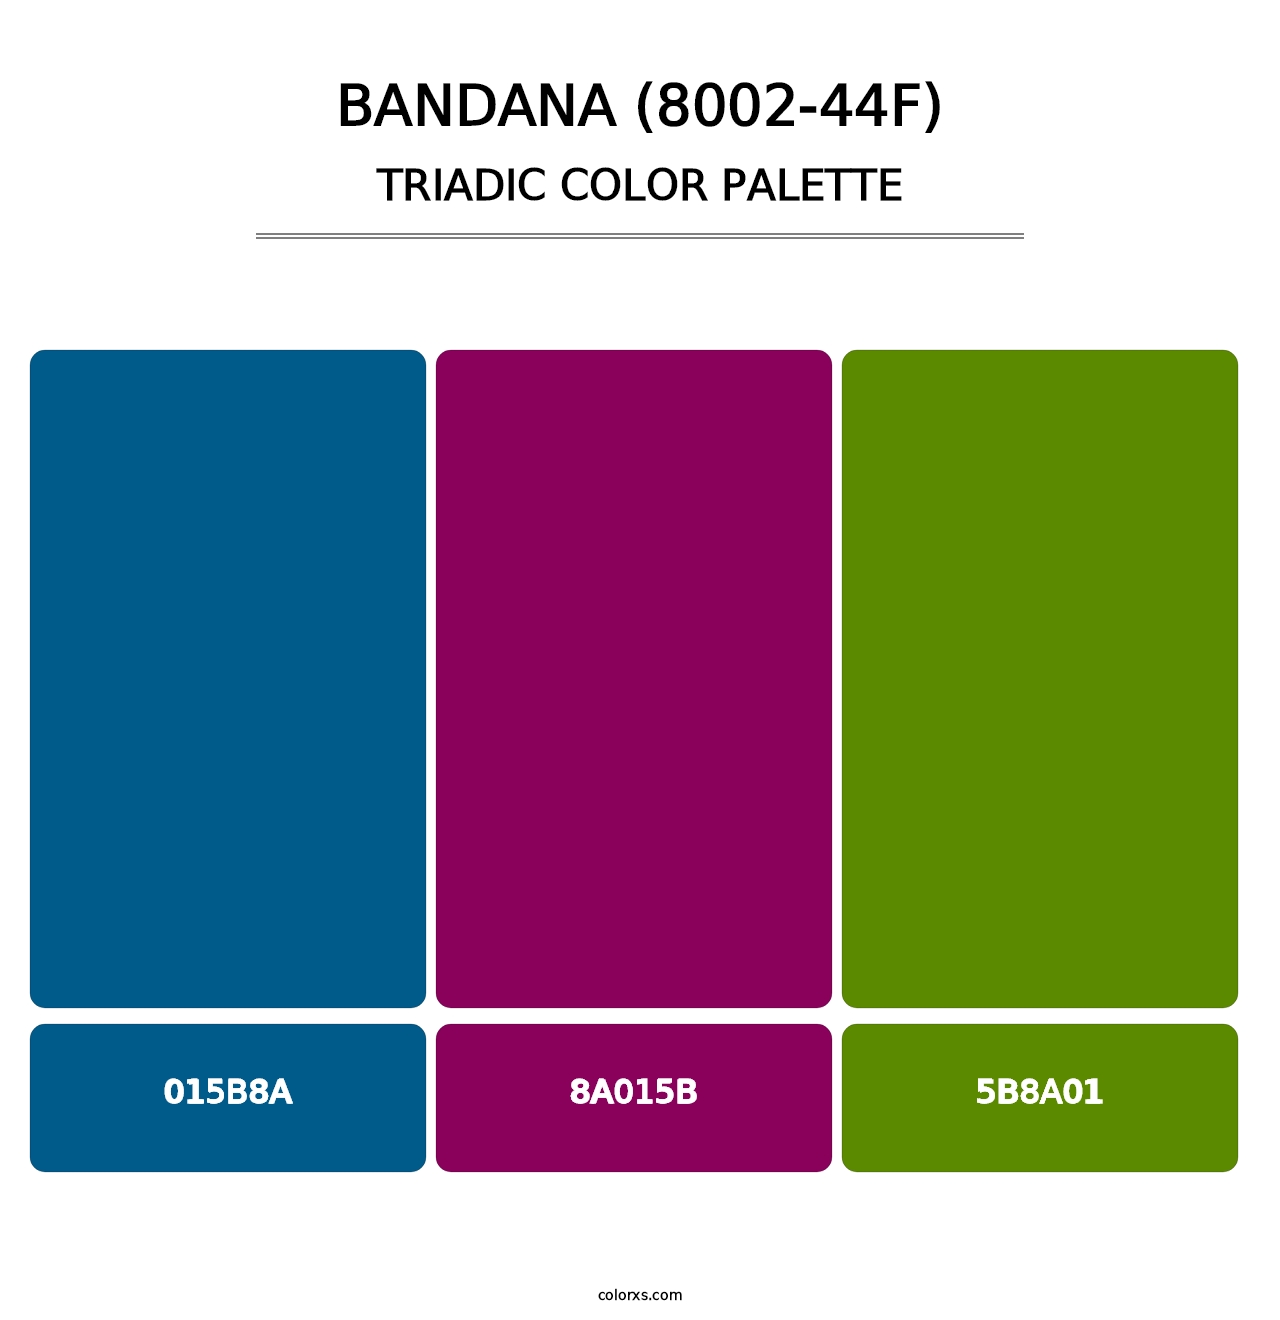 Bandana (8002-44F) - Triadic Color Palette